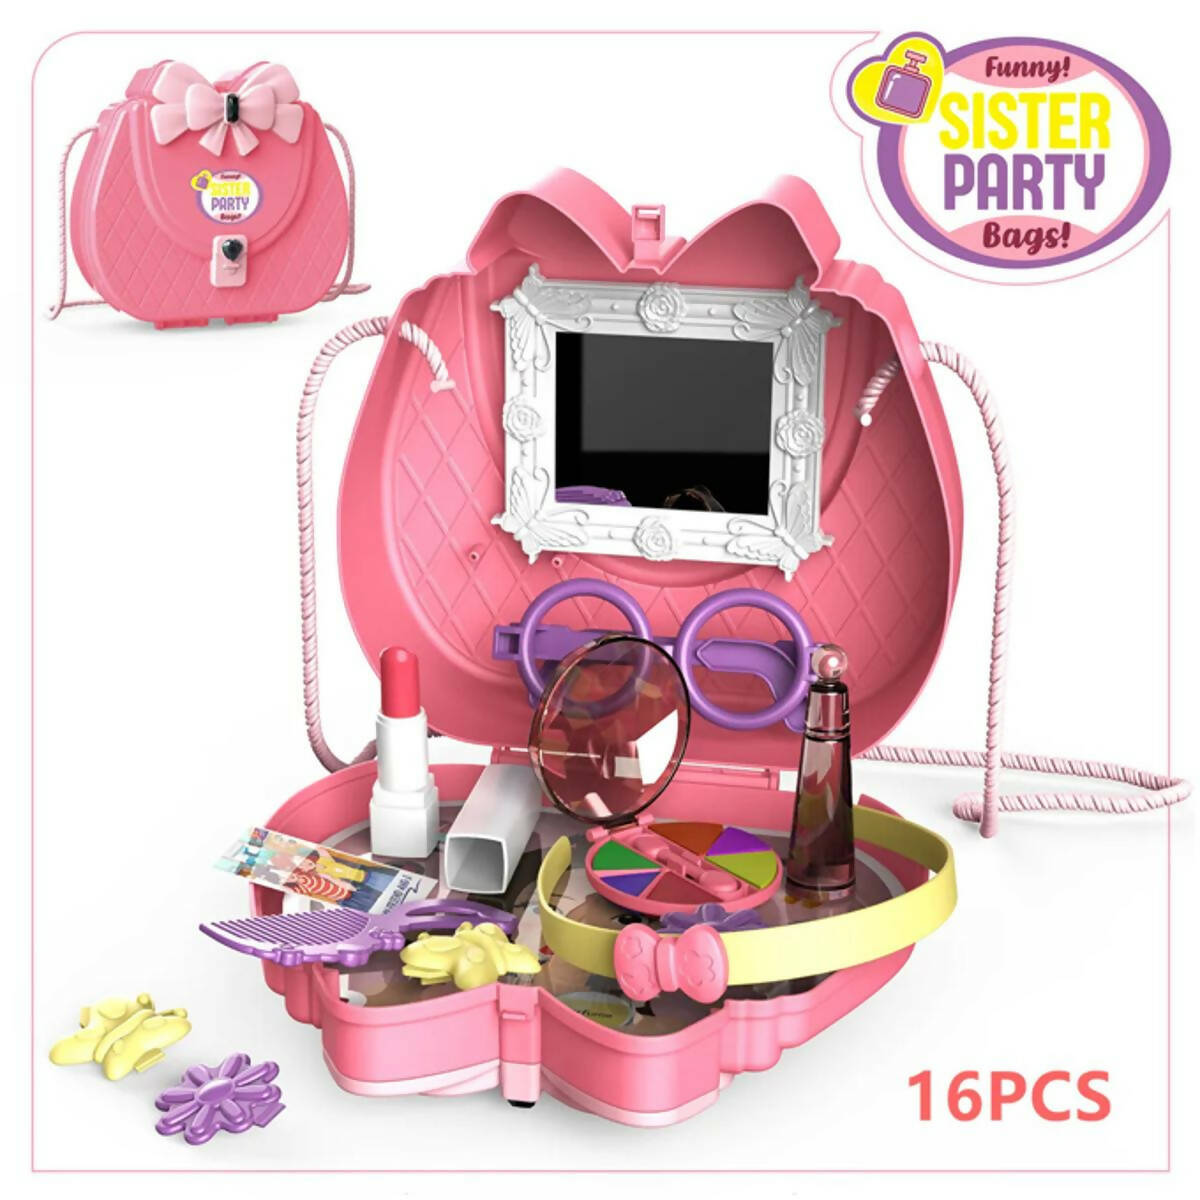 Planet X - Portable Sister Party Beauty Play Sets - 16pcs - Glamorous Adventure